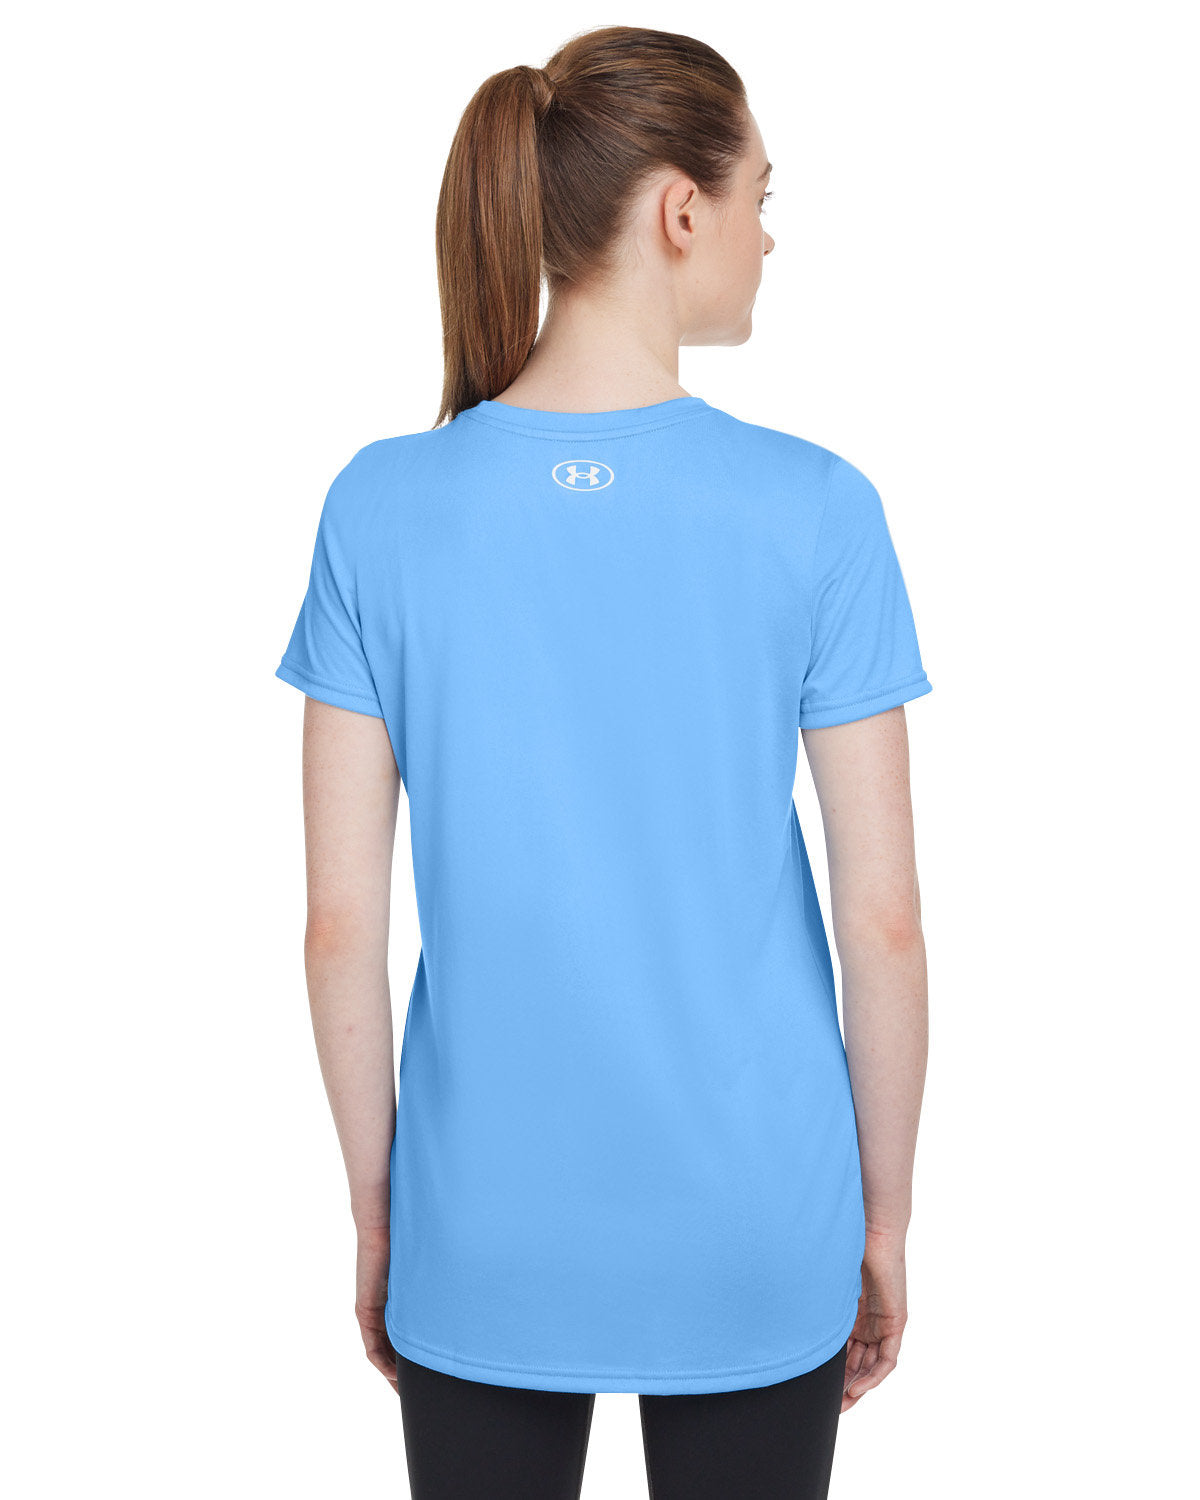 Under Armour Ladies Tech T-Shirt, Carol Blue